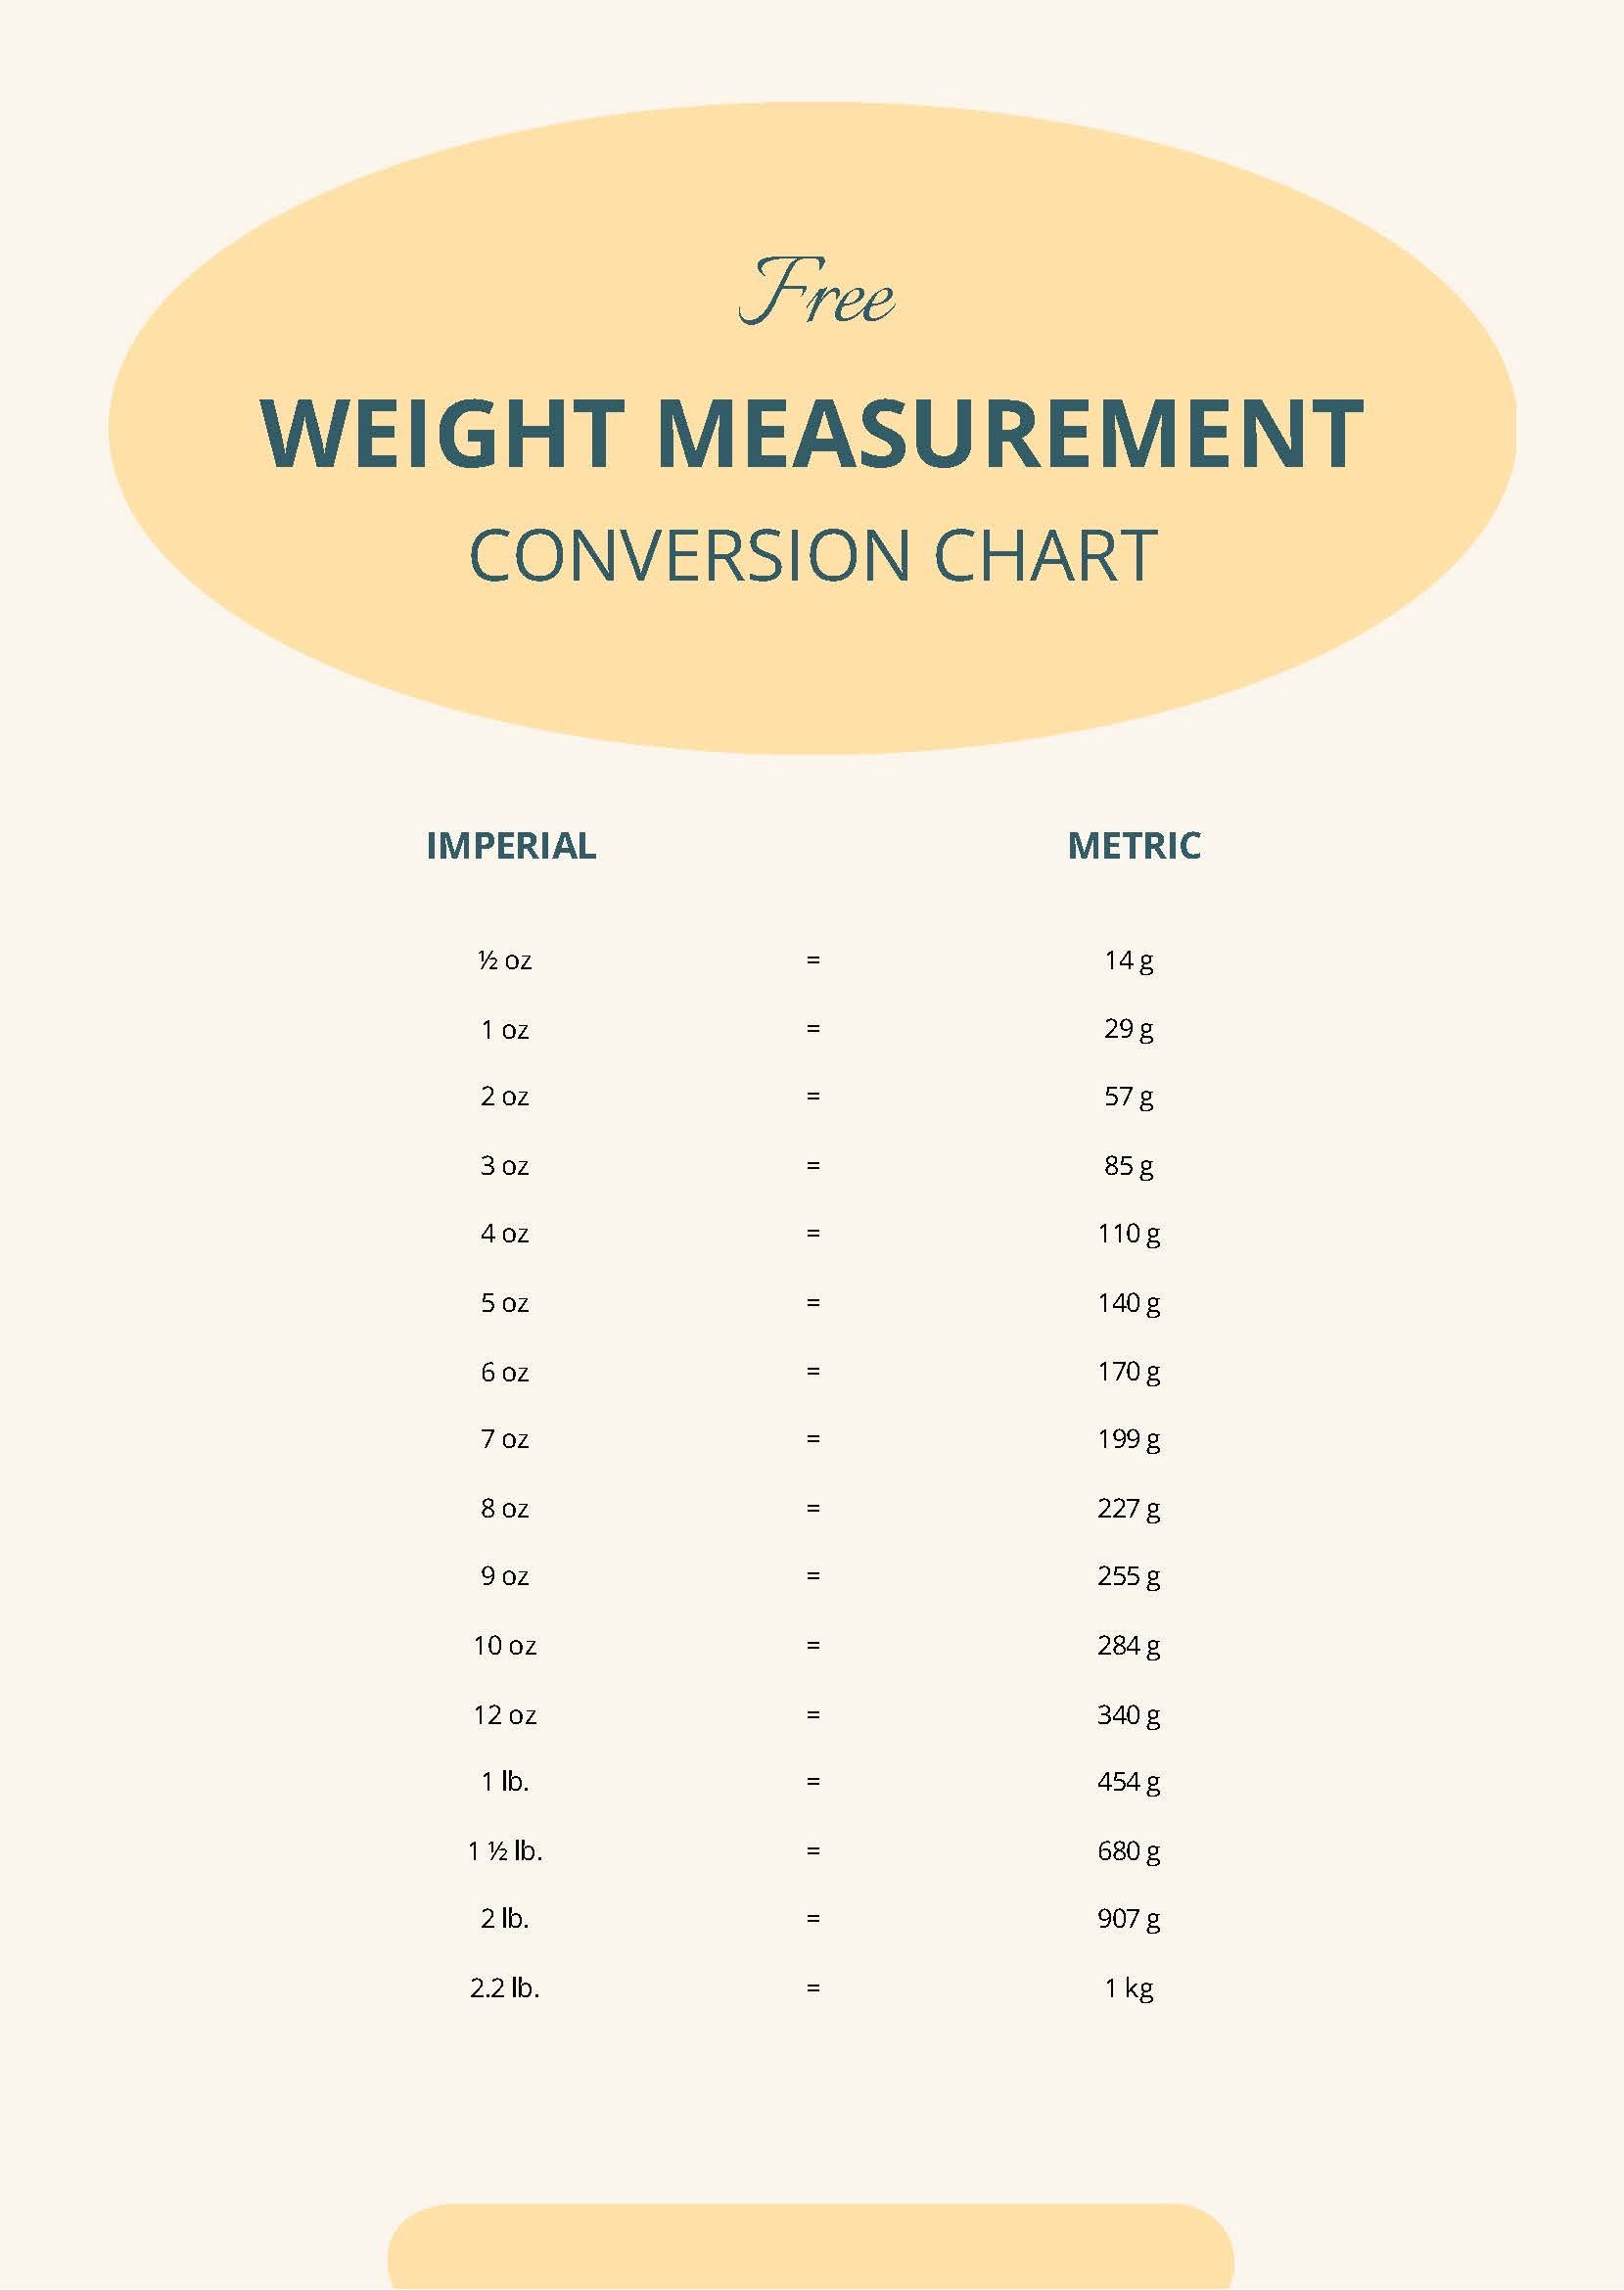 https://images.template.net/100809/free-weight-measurement-conversion-chart-0rnl7.jpg